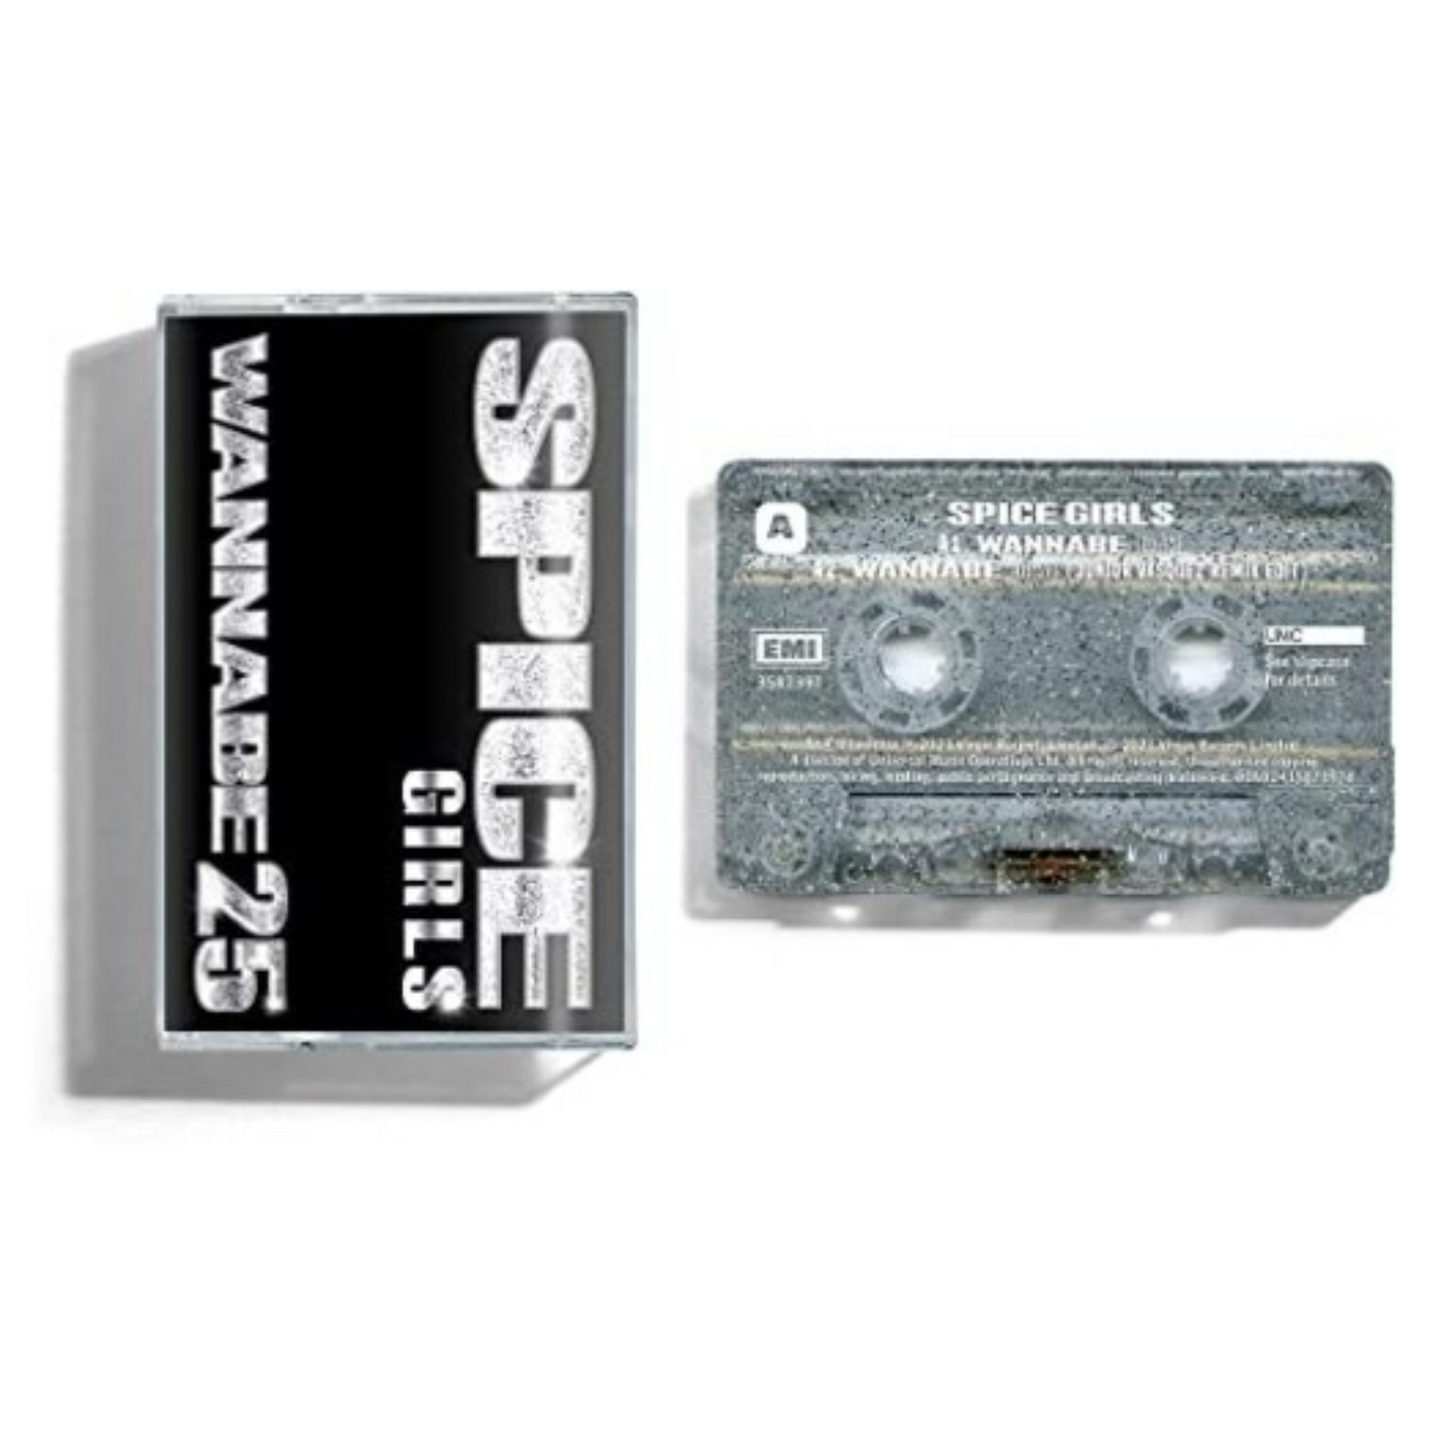 Spice Girls - Wannabe 25 (Cassette)